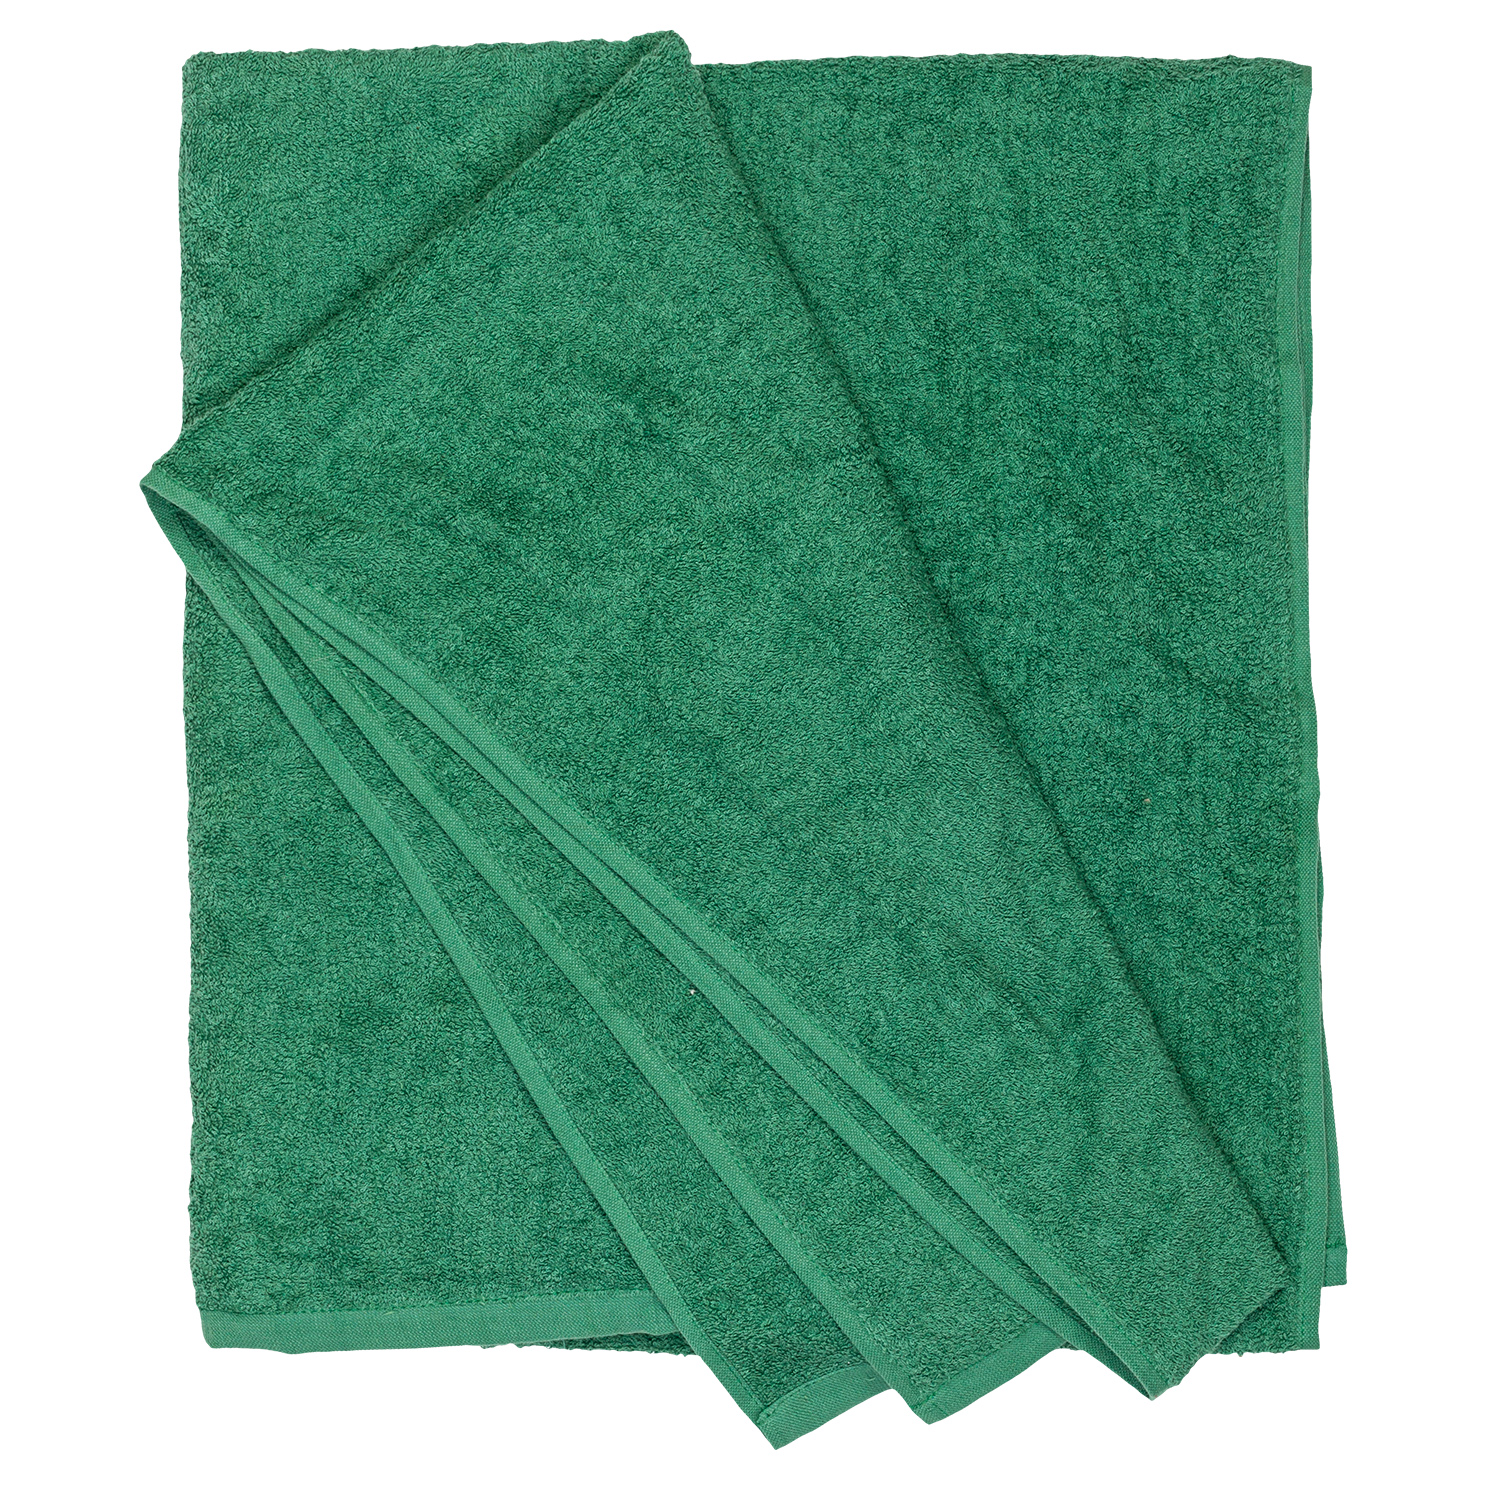 Bath towel series Helsinki in dark green by Adamo in large sizes 100x220 cm or 155x220 cm